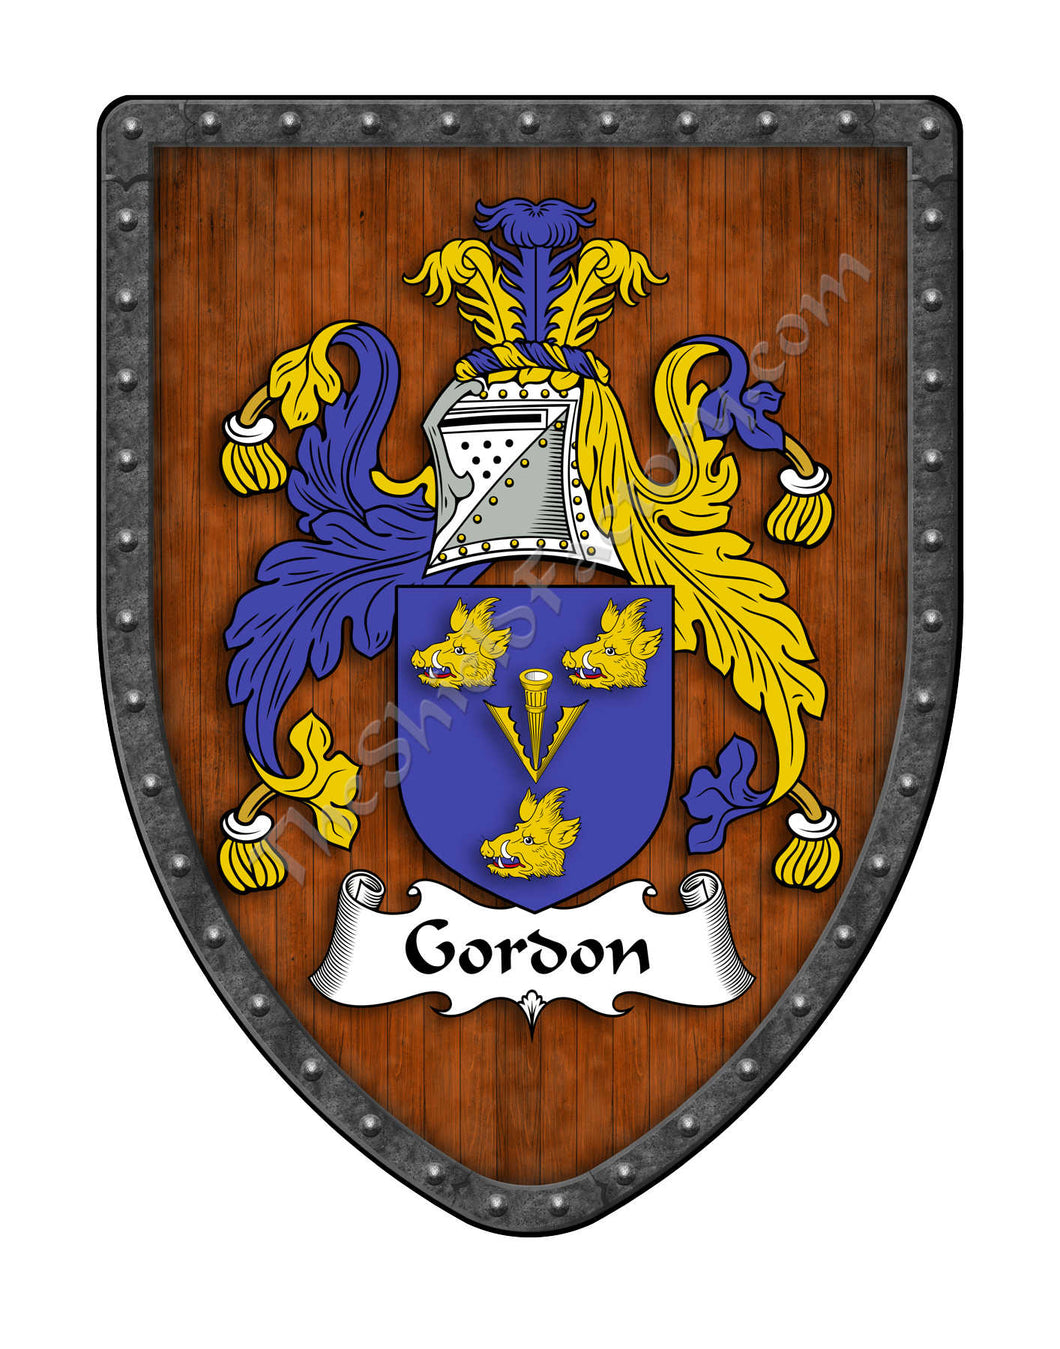 Gordon Family Crest Coat of Arms